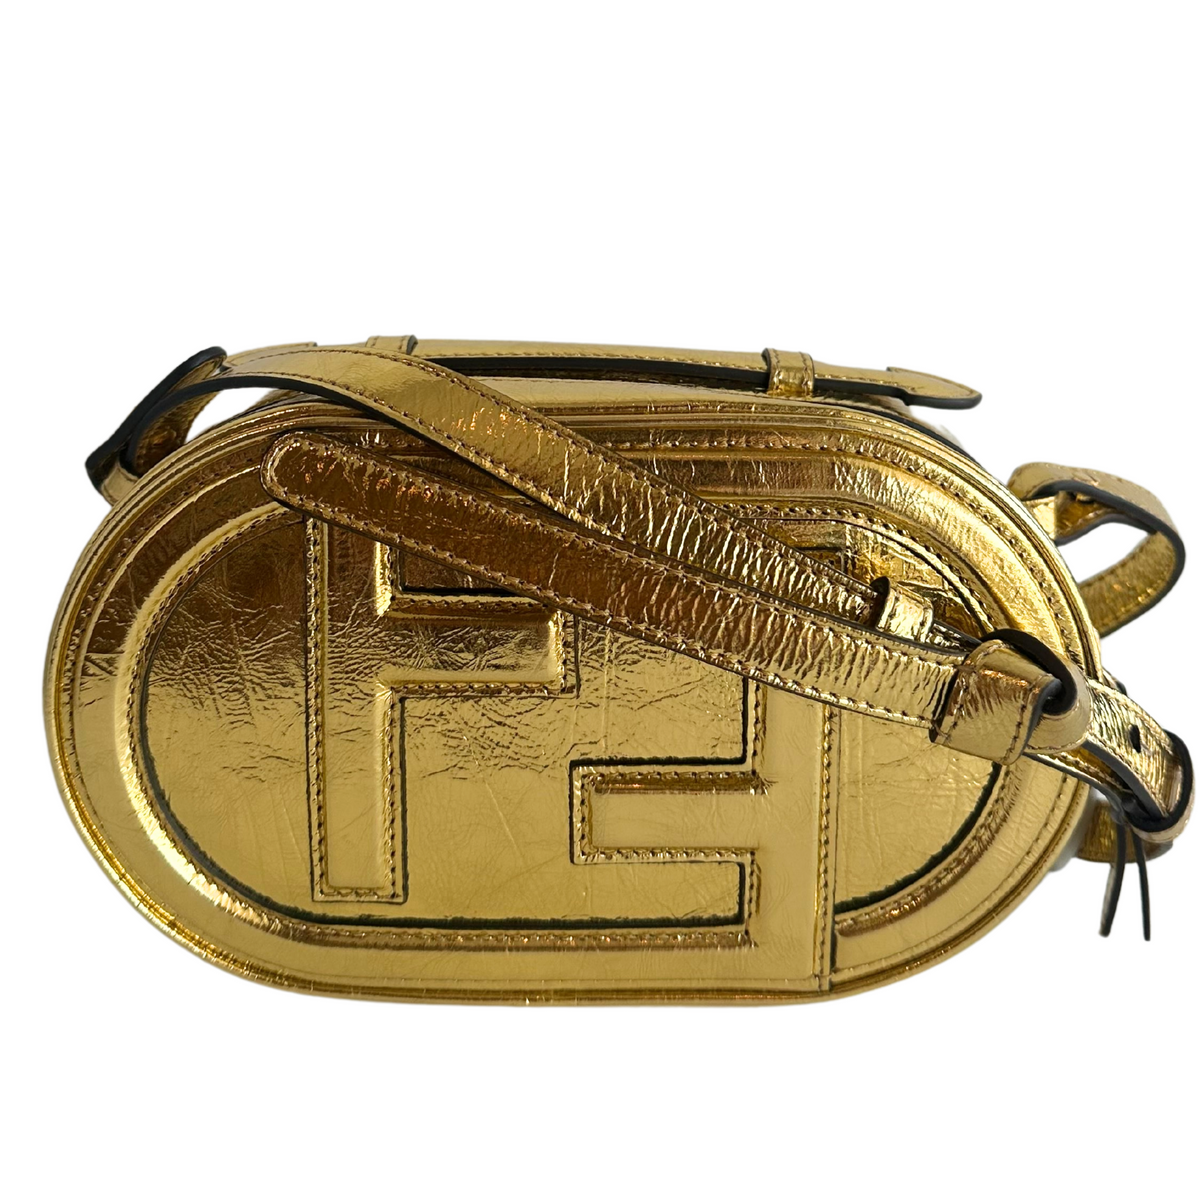 Fendi O'Lock Mini Bag&nbsp;  Gold Calfskin&nbsp;  Zip Around Top&nbsp;  Gold-Toned Hardware&nbsp;  Adjustable Strap&nbsp;  Exterior Flat Pocket&nbsp;